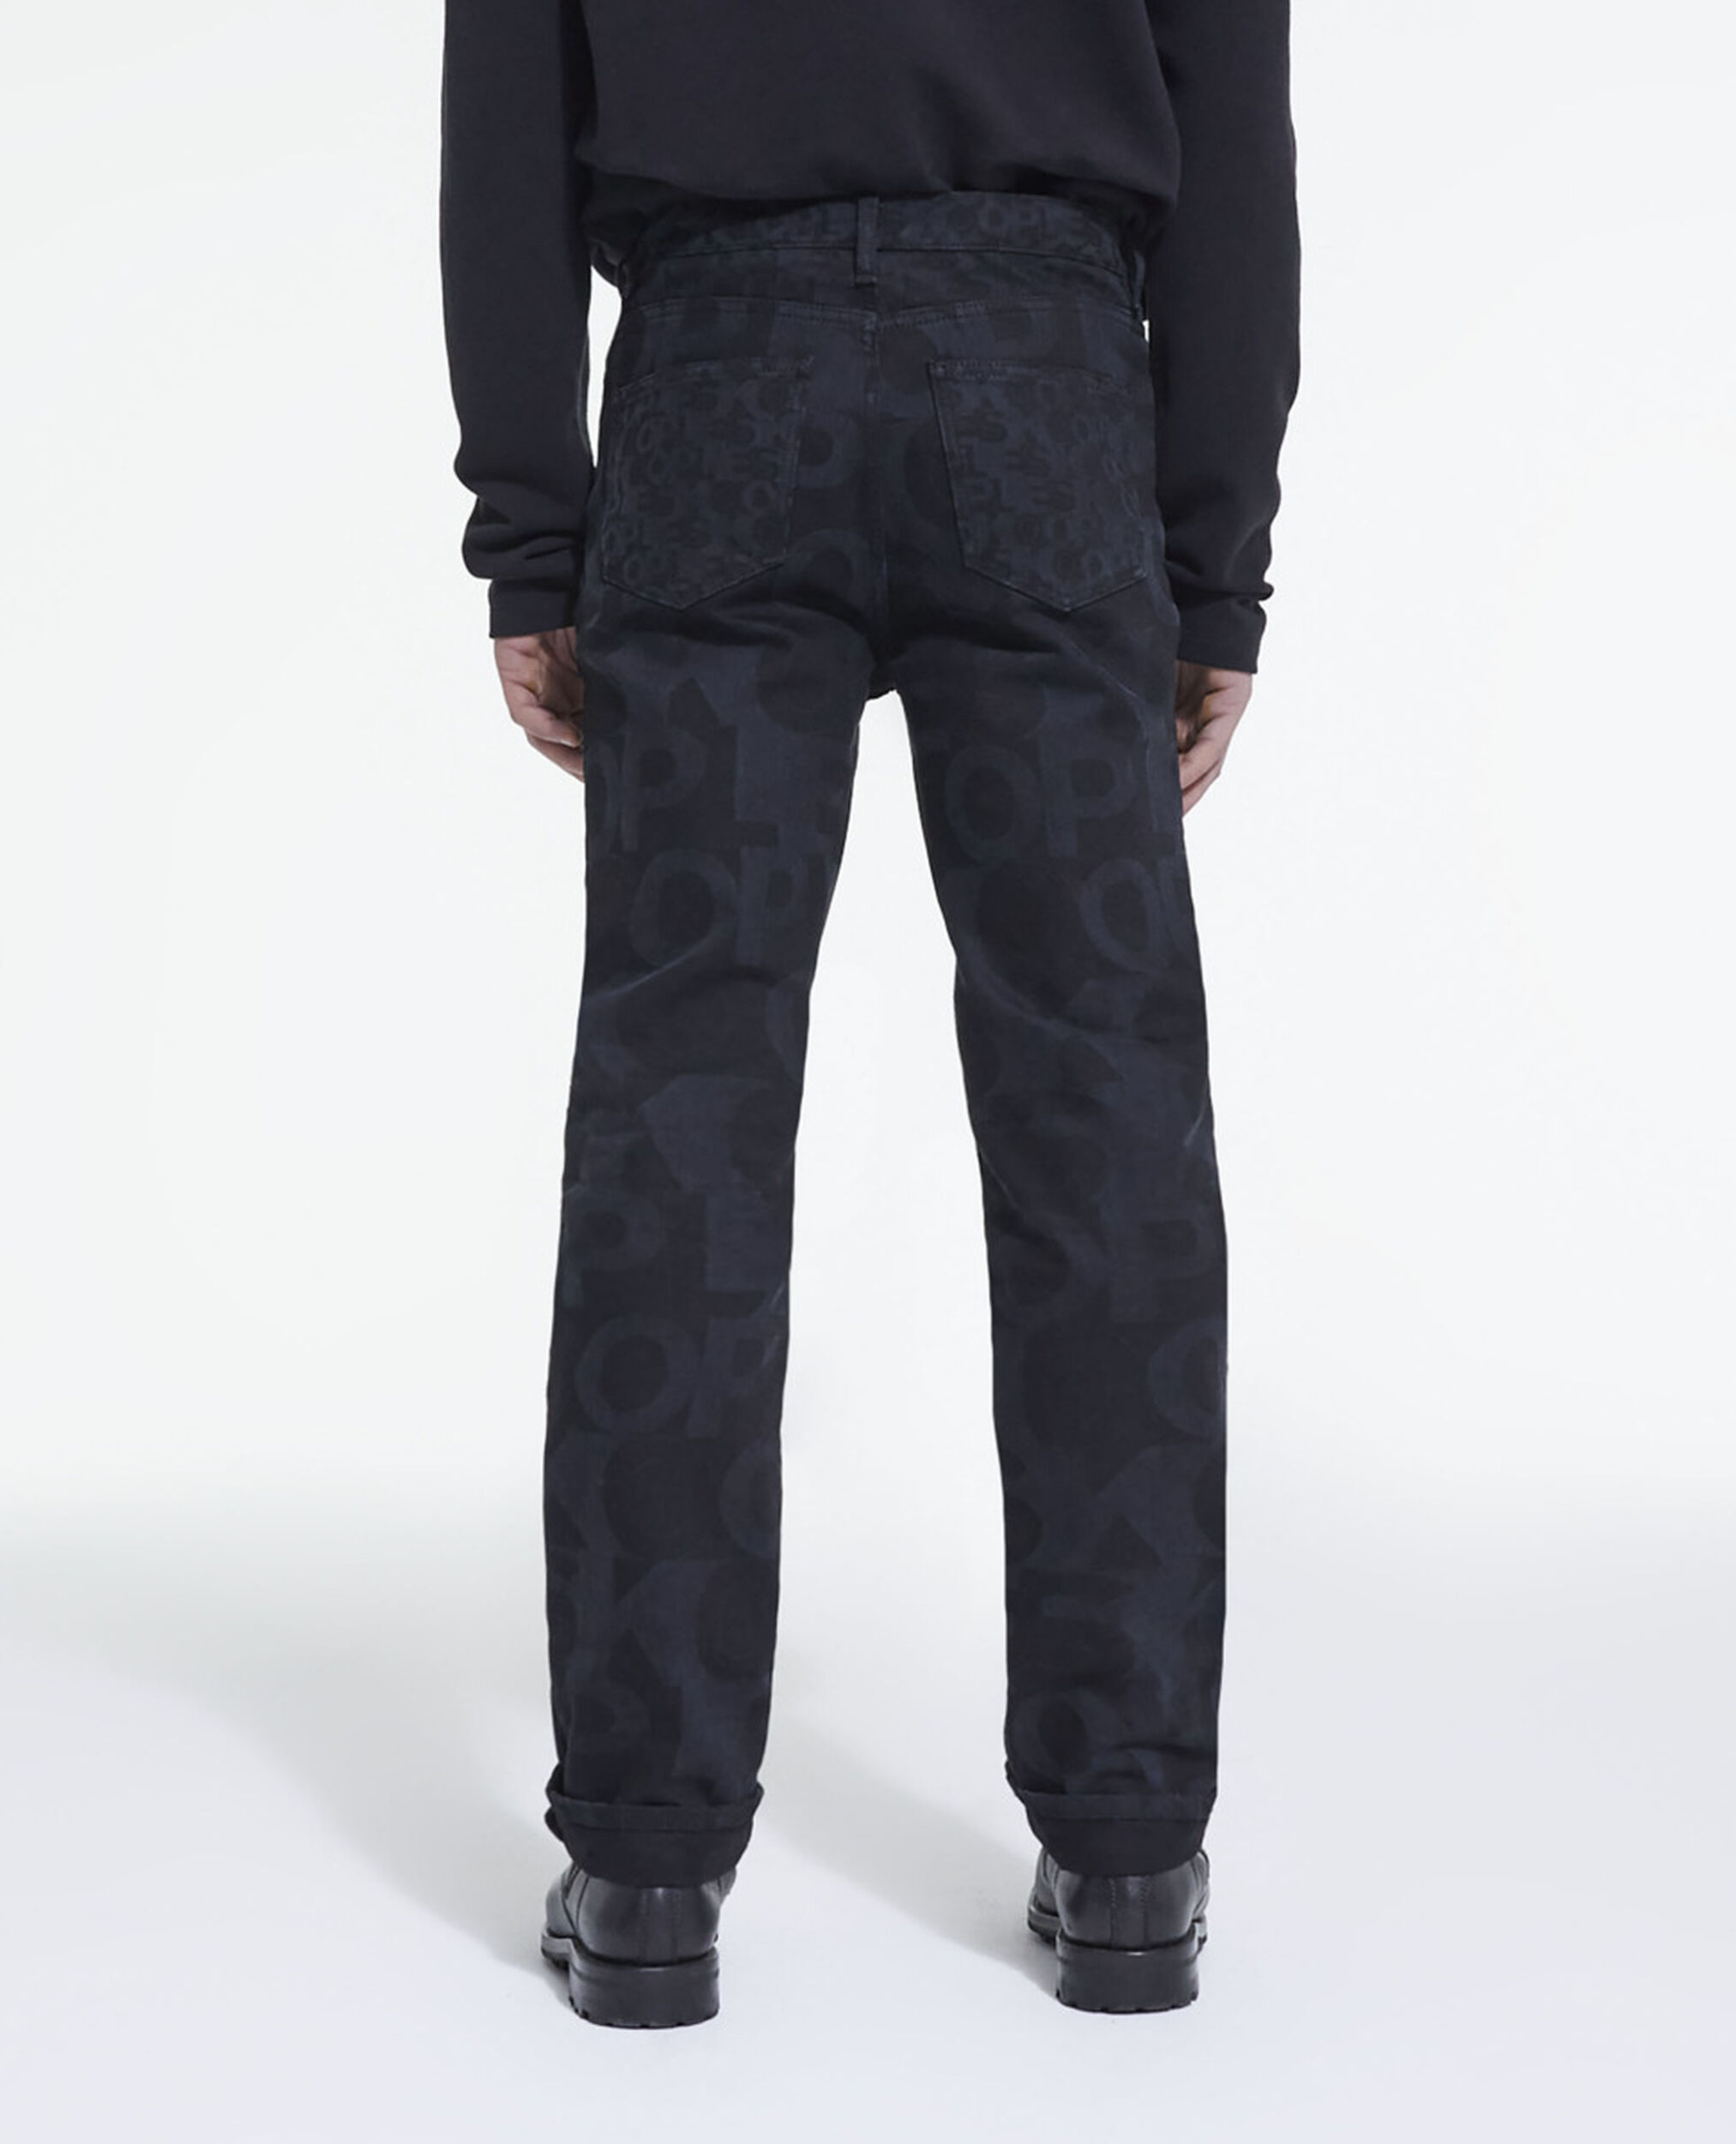 Jeans mit geradem Bein und The Kooples Logo, BLACK WASHED, hi-res image number null